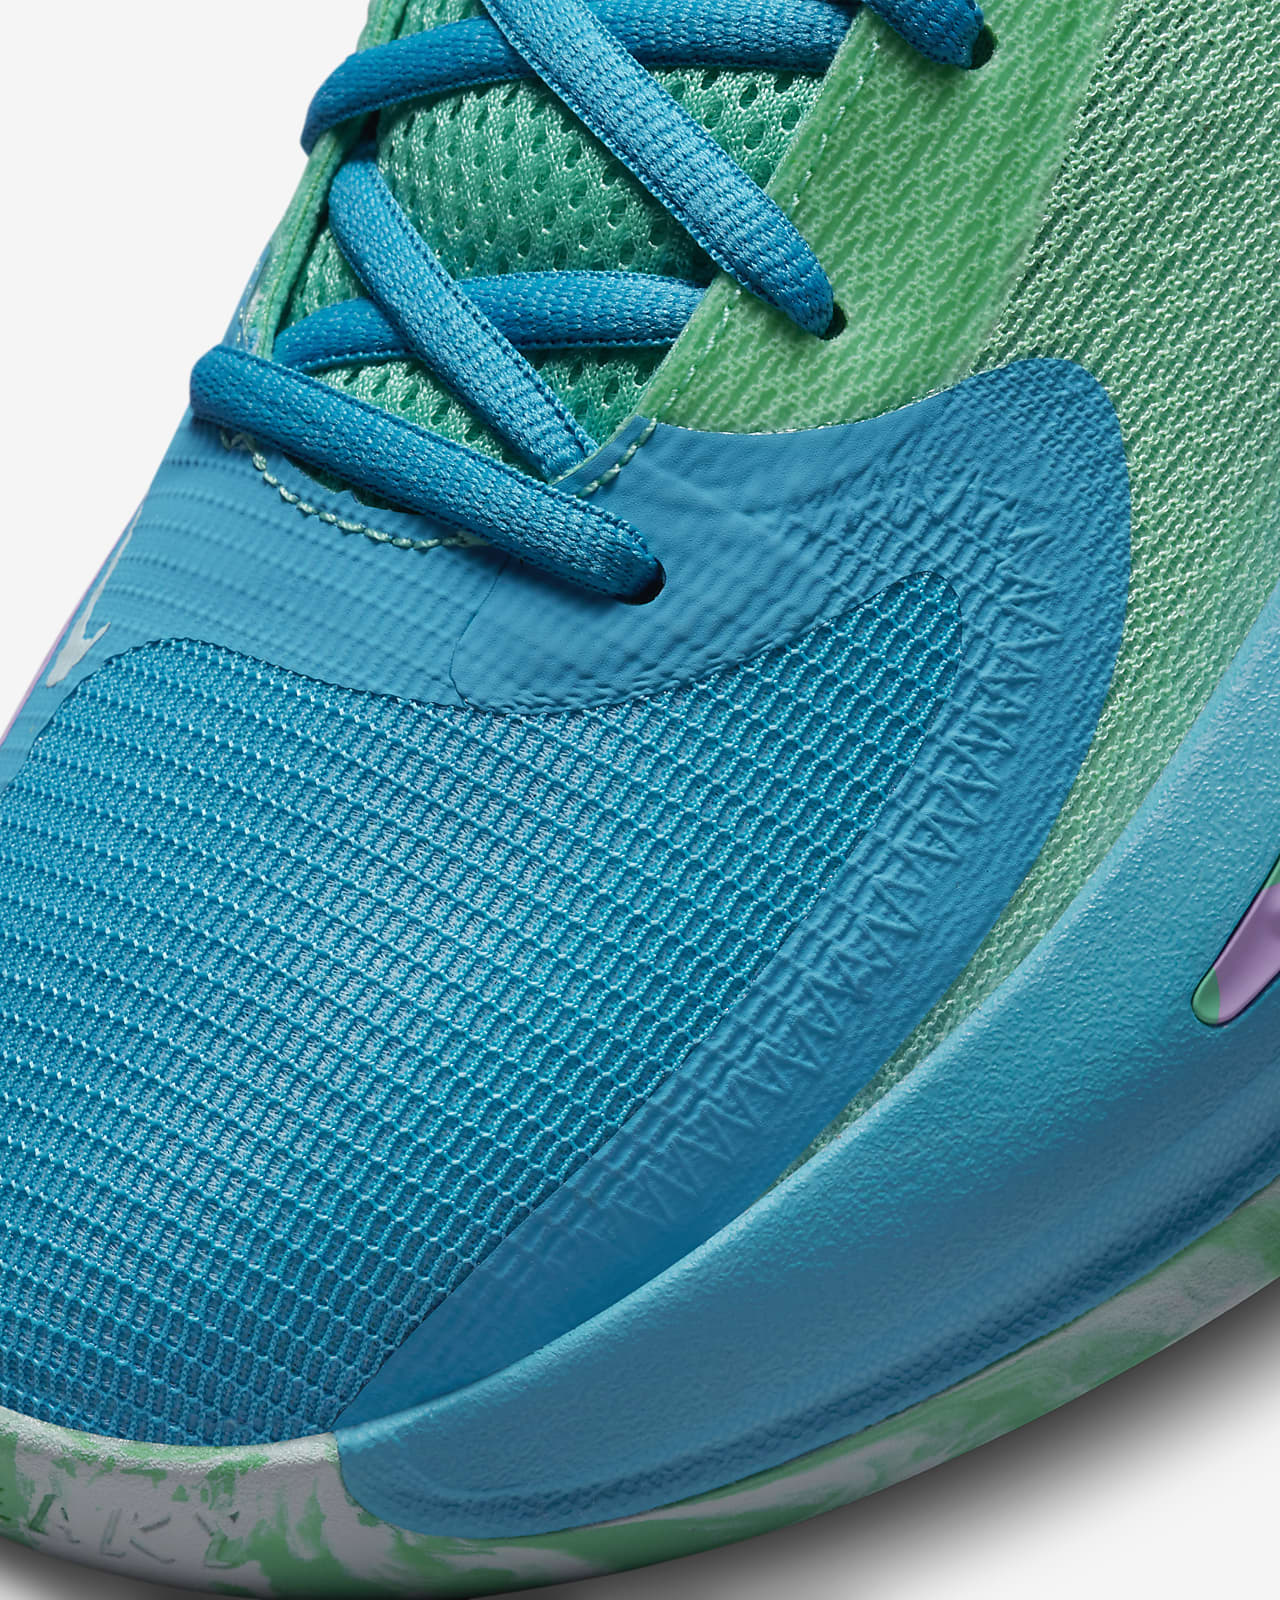 Zoom Freak 4 'Birthstone' Basketball Shoes. Nike HR